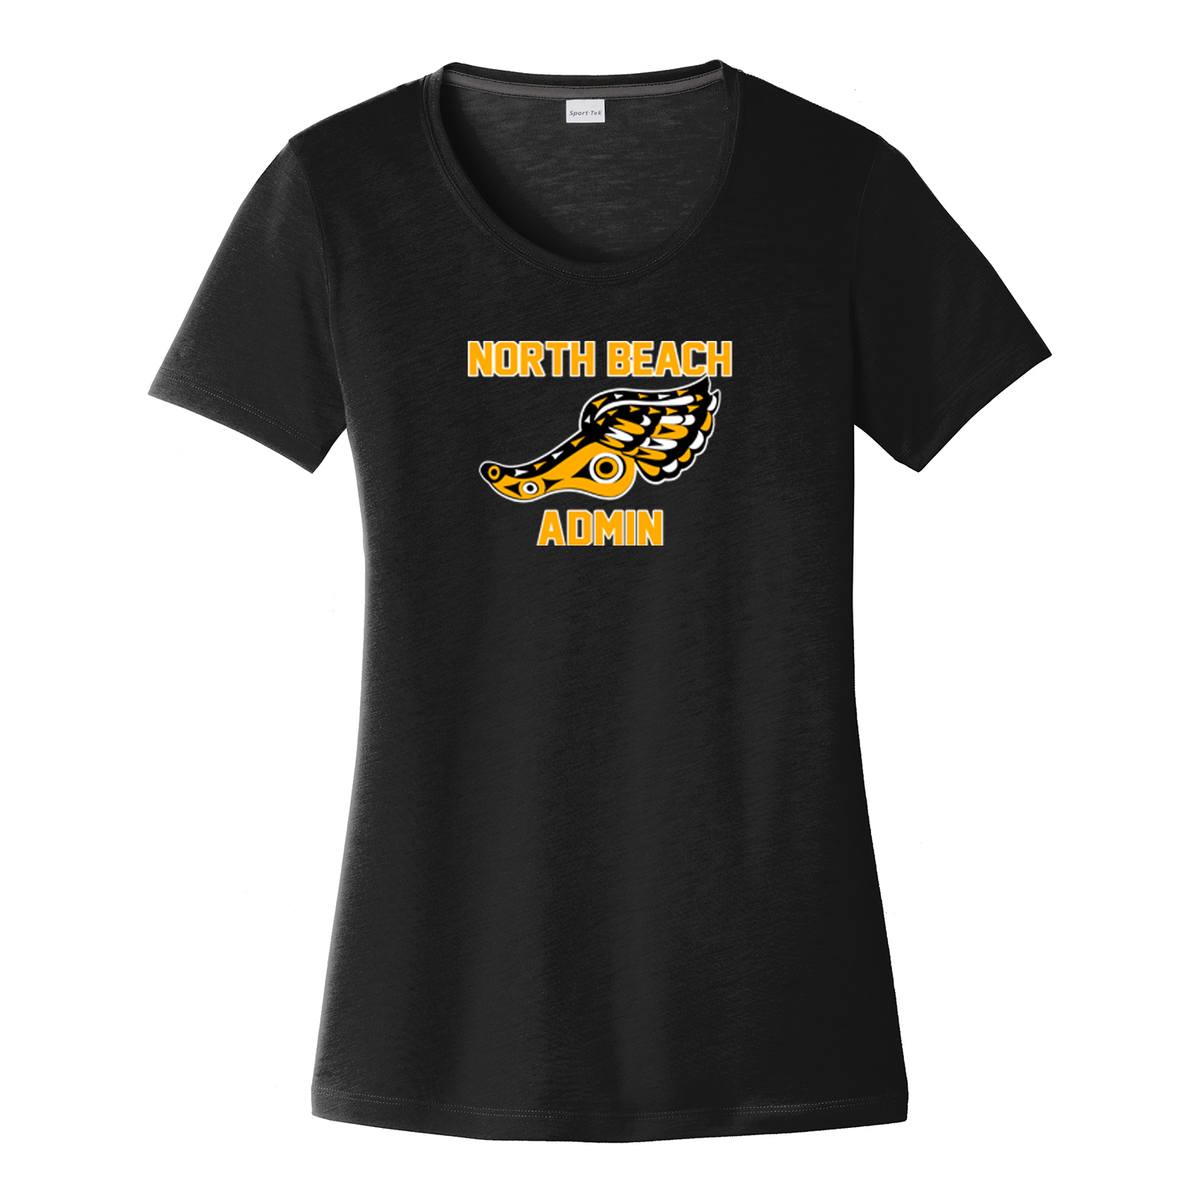 North Beach Admin  Women's CottonTouch Performance T-Shirt